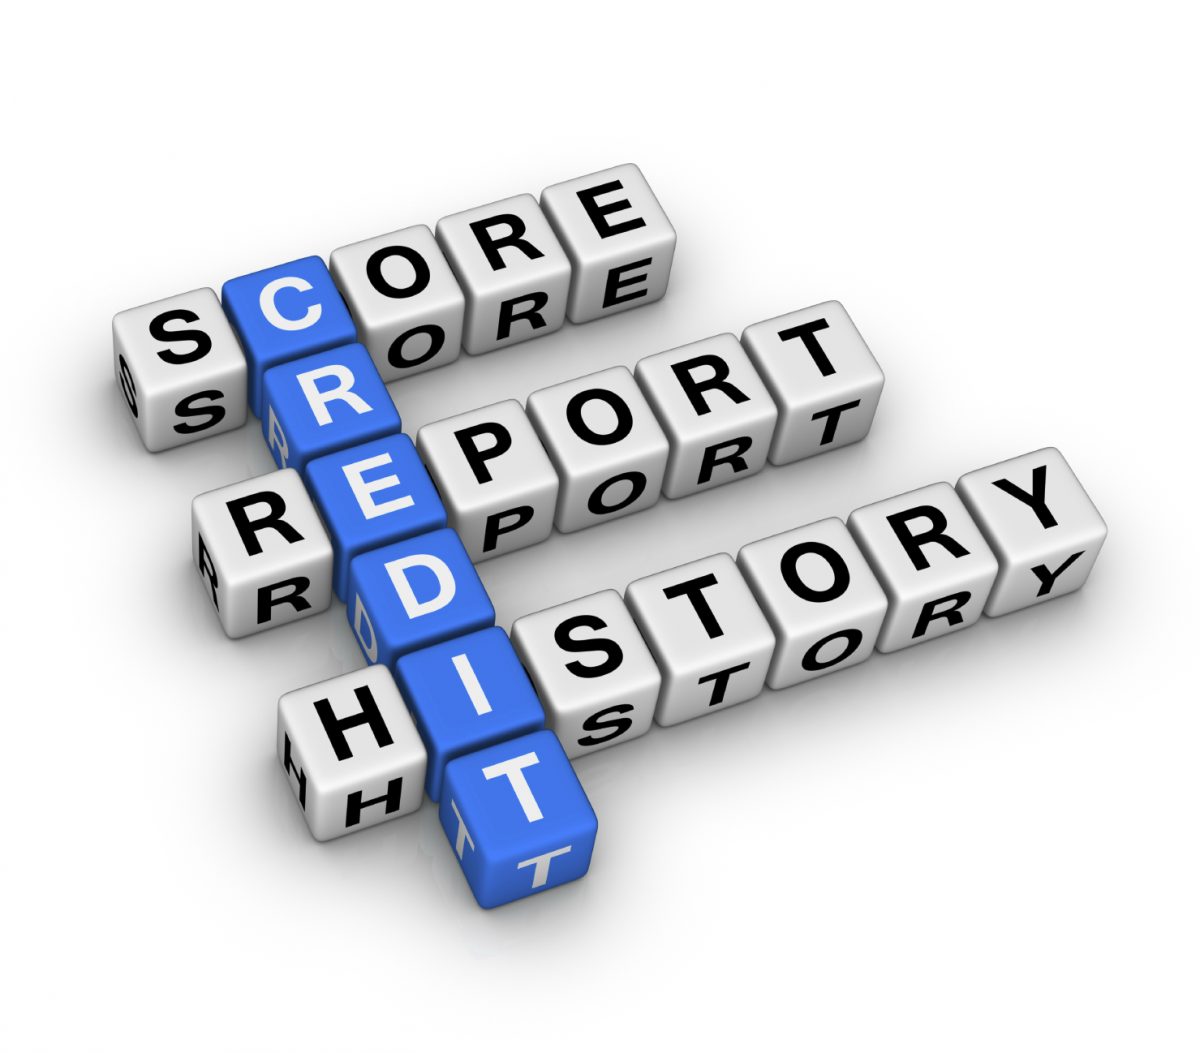 what-credit-score-does-prime-lending-use-leia-aqui-what-credit-score